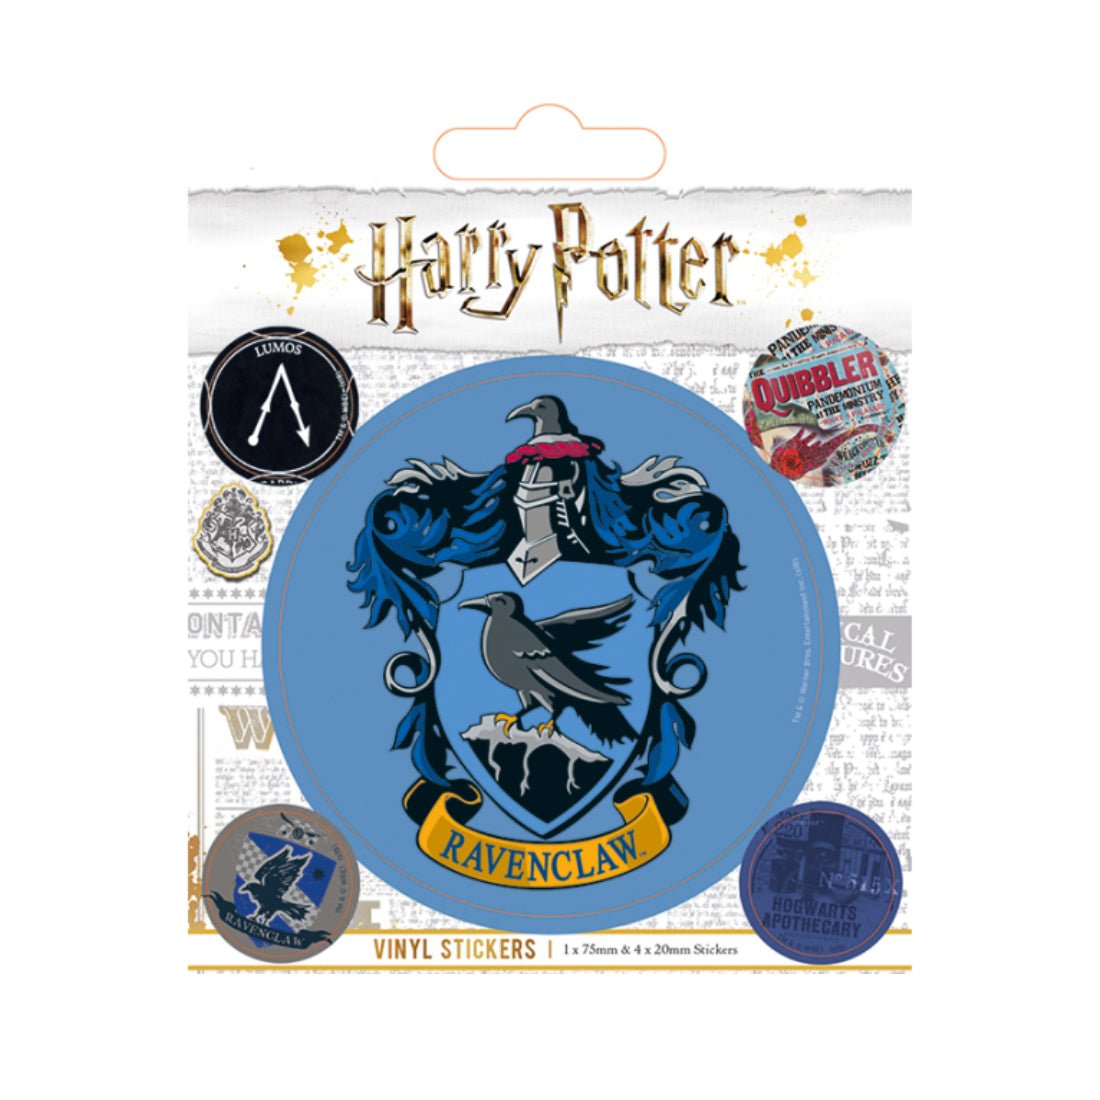 Harry Potter - Ravenclaw Vinyl Sticker Pack - أكسسوار - Store 974 | ستور ٩٧٤